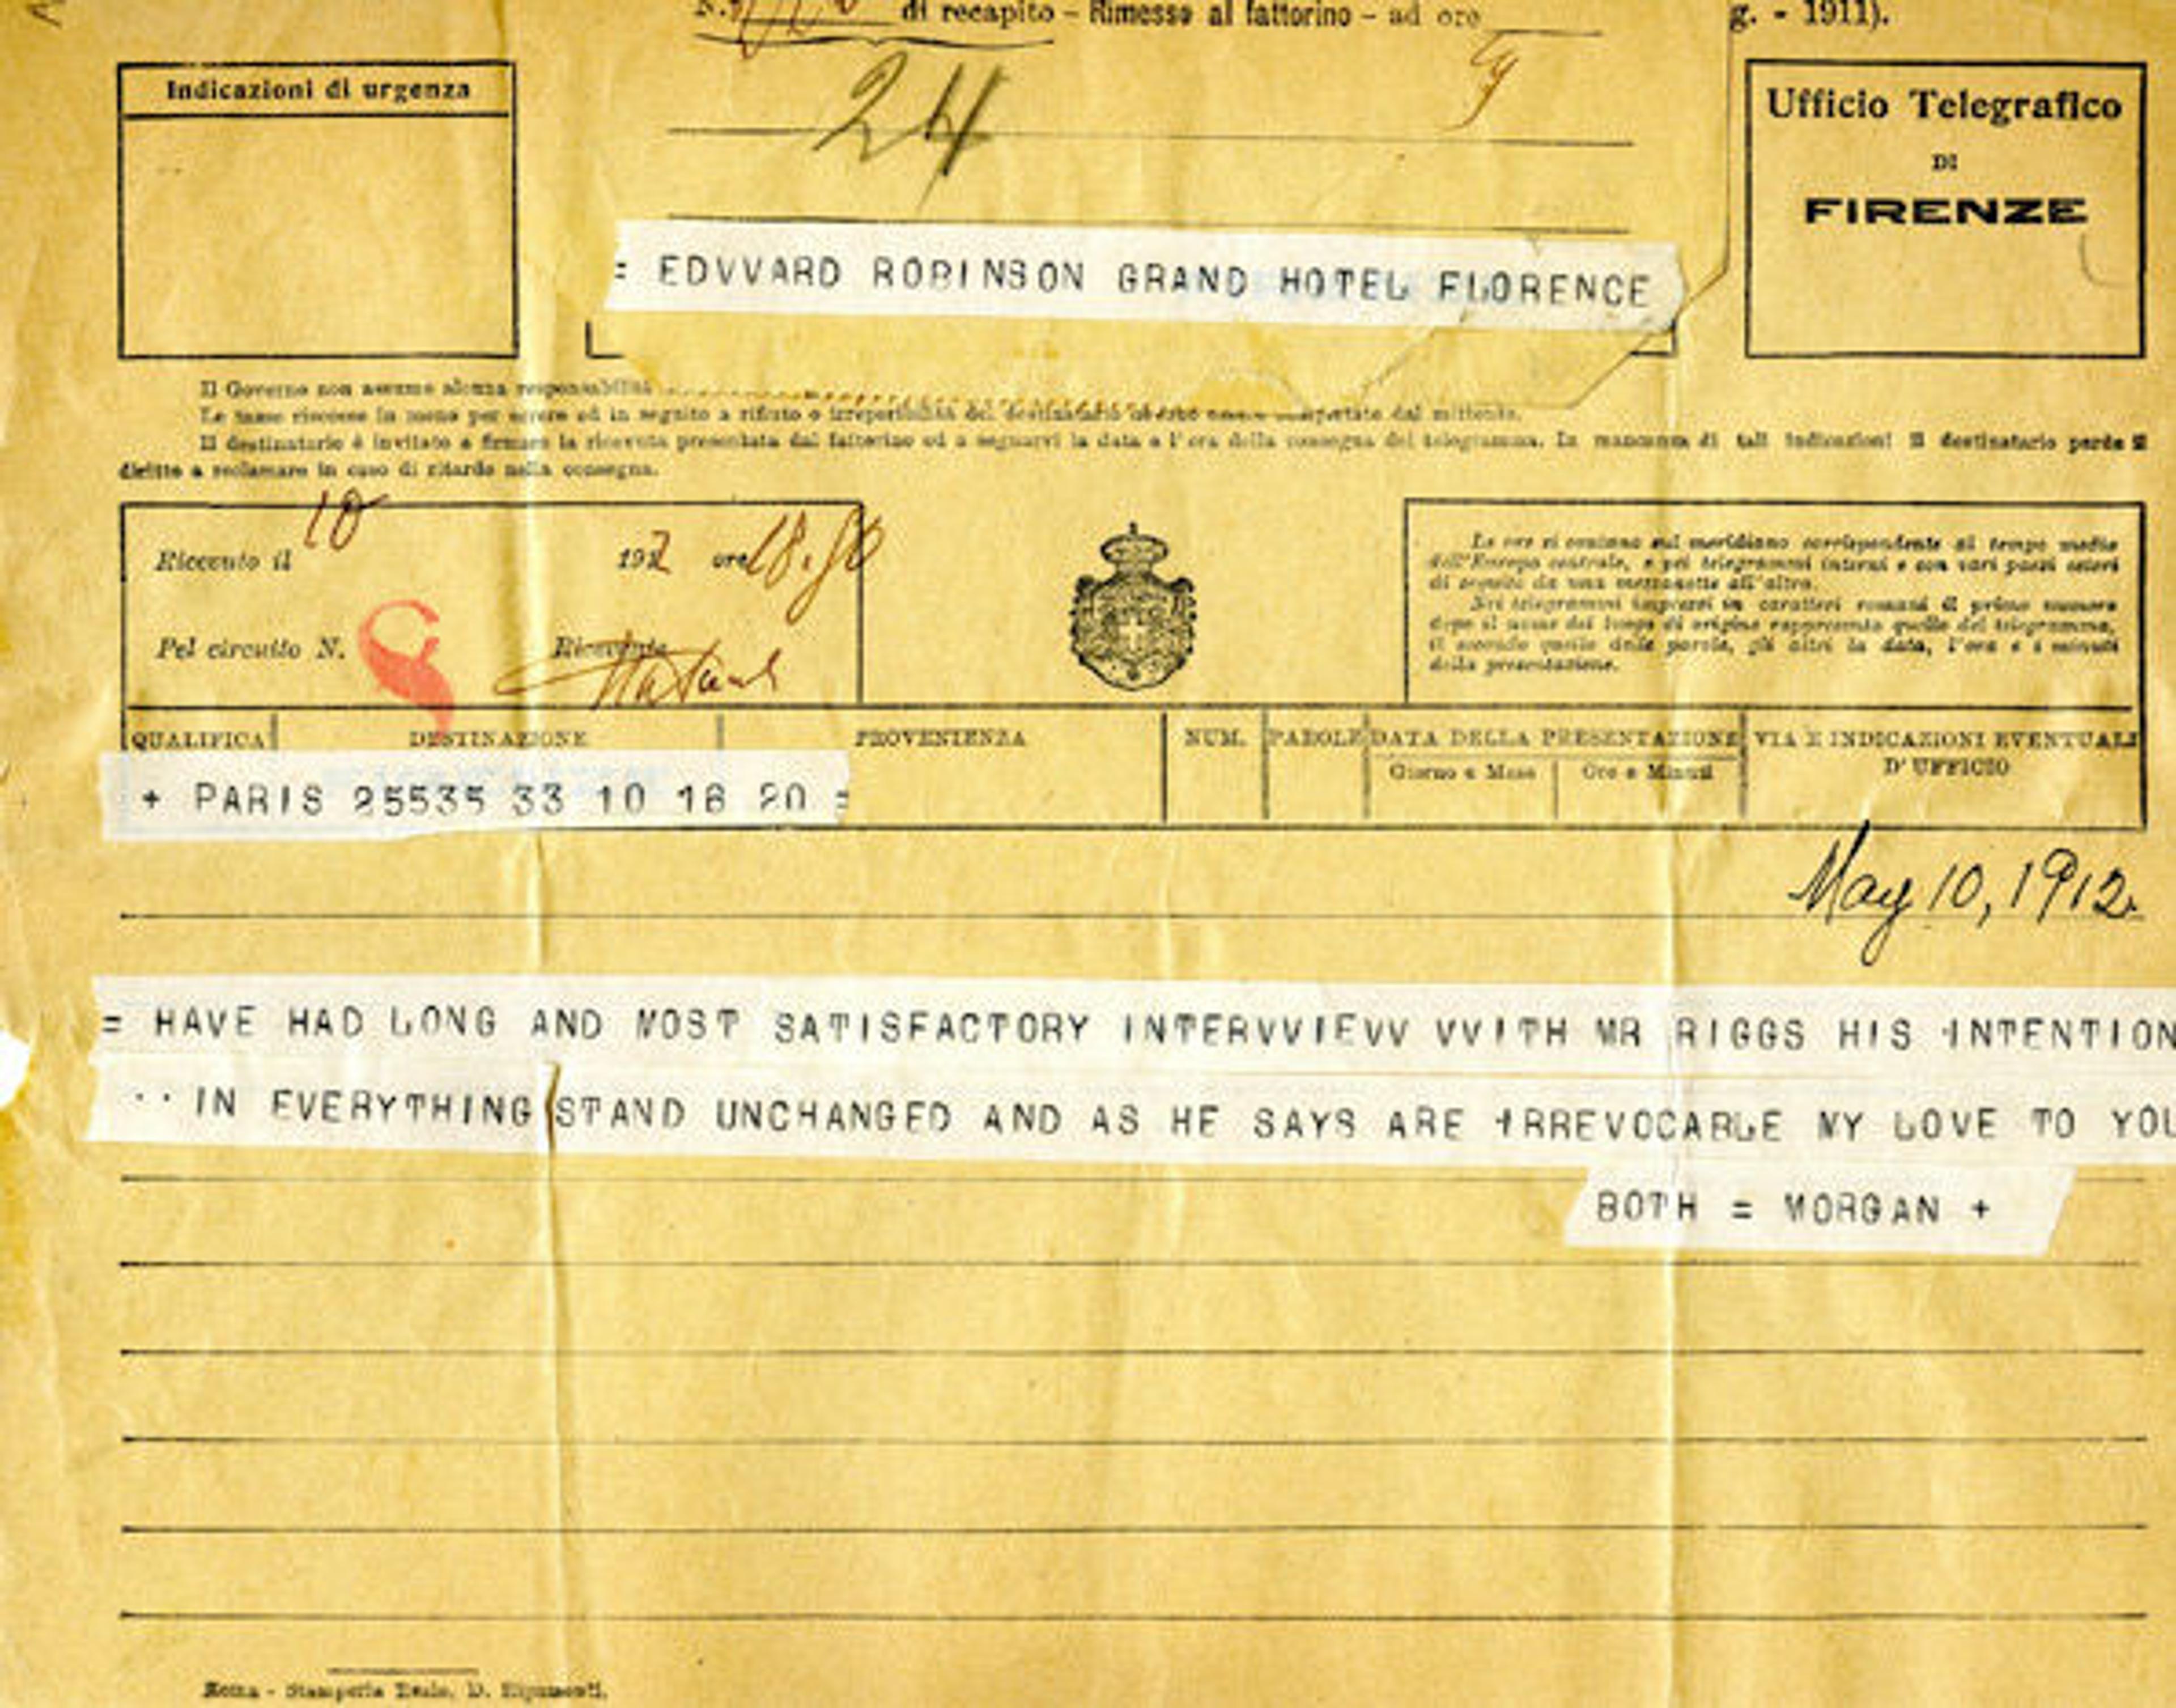 Telegram from Museum President J. P. Morgan to Director Edward Robinson